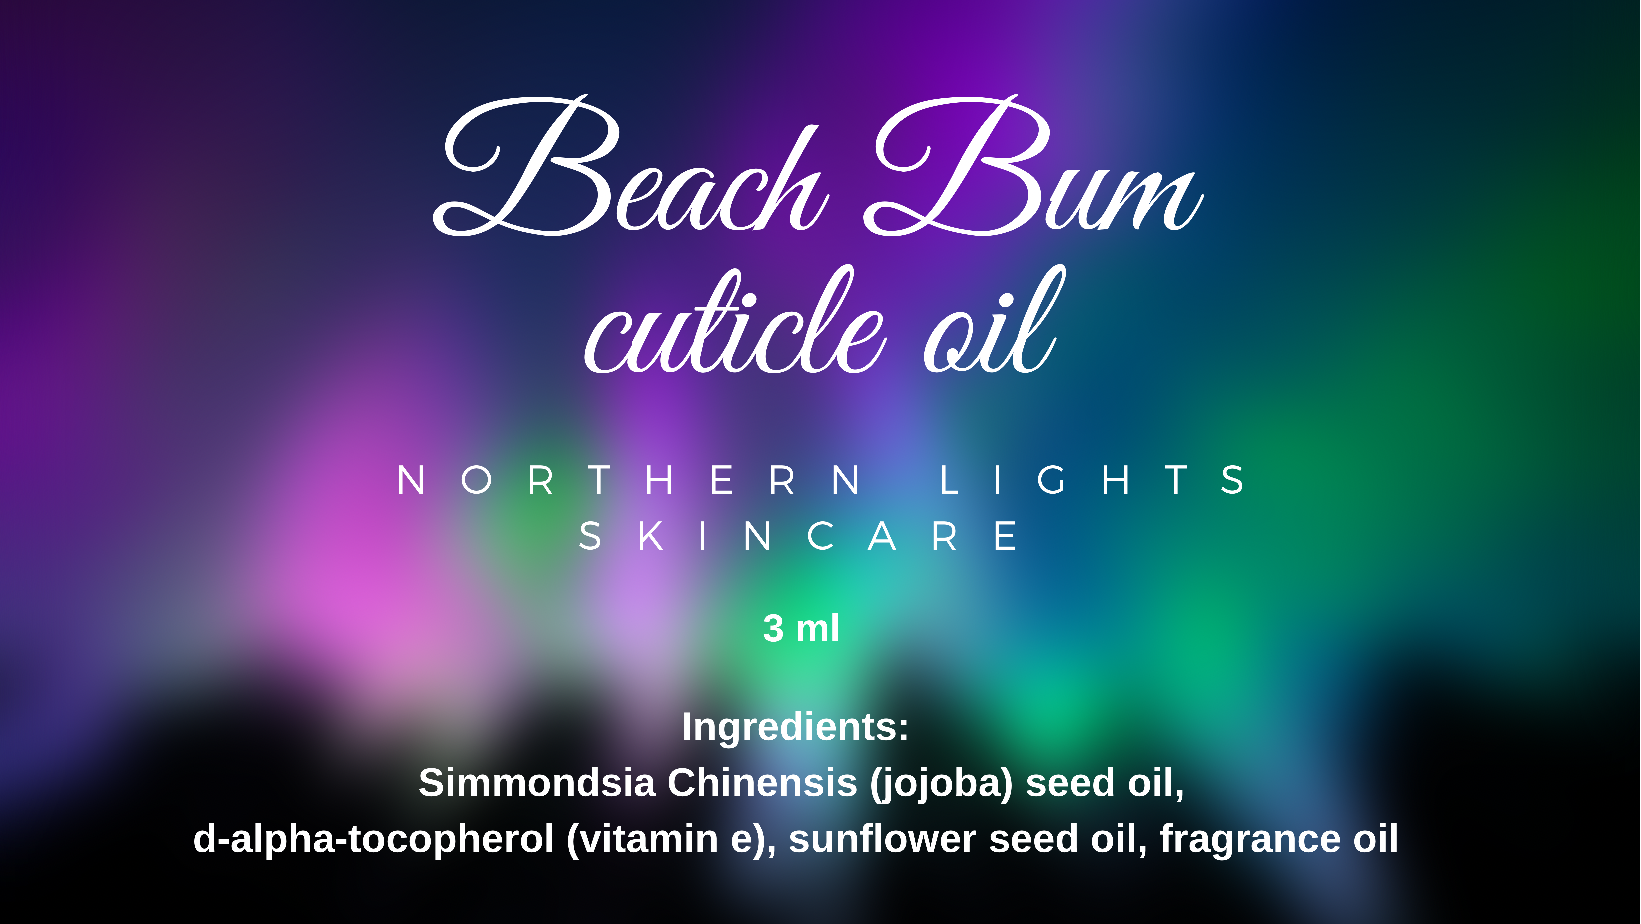 Beach Bum cuticle oil (retiring)